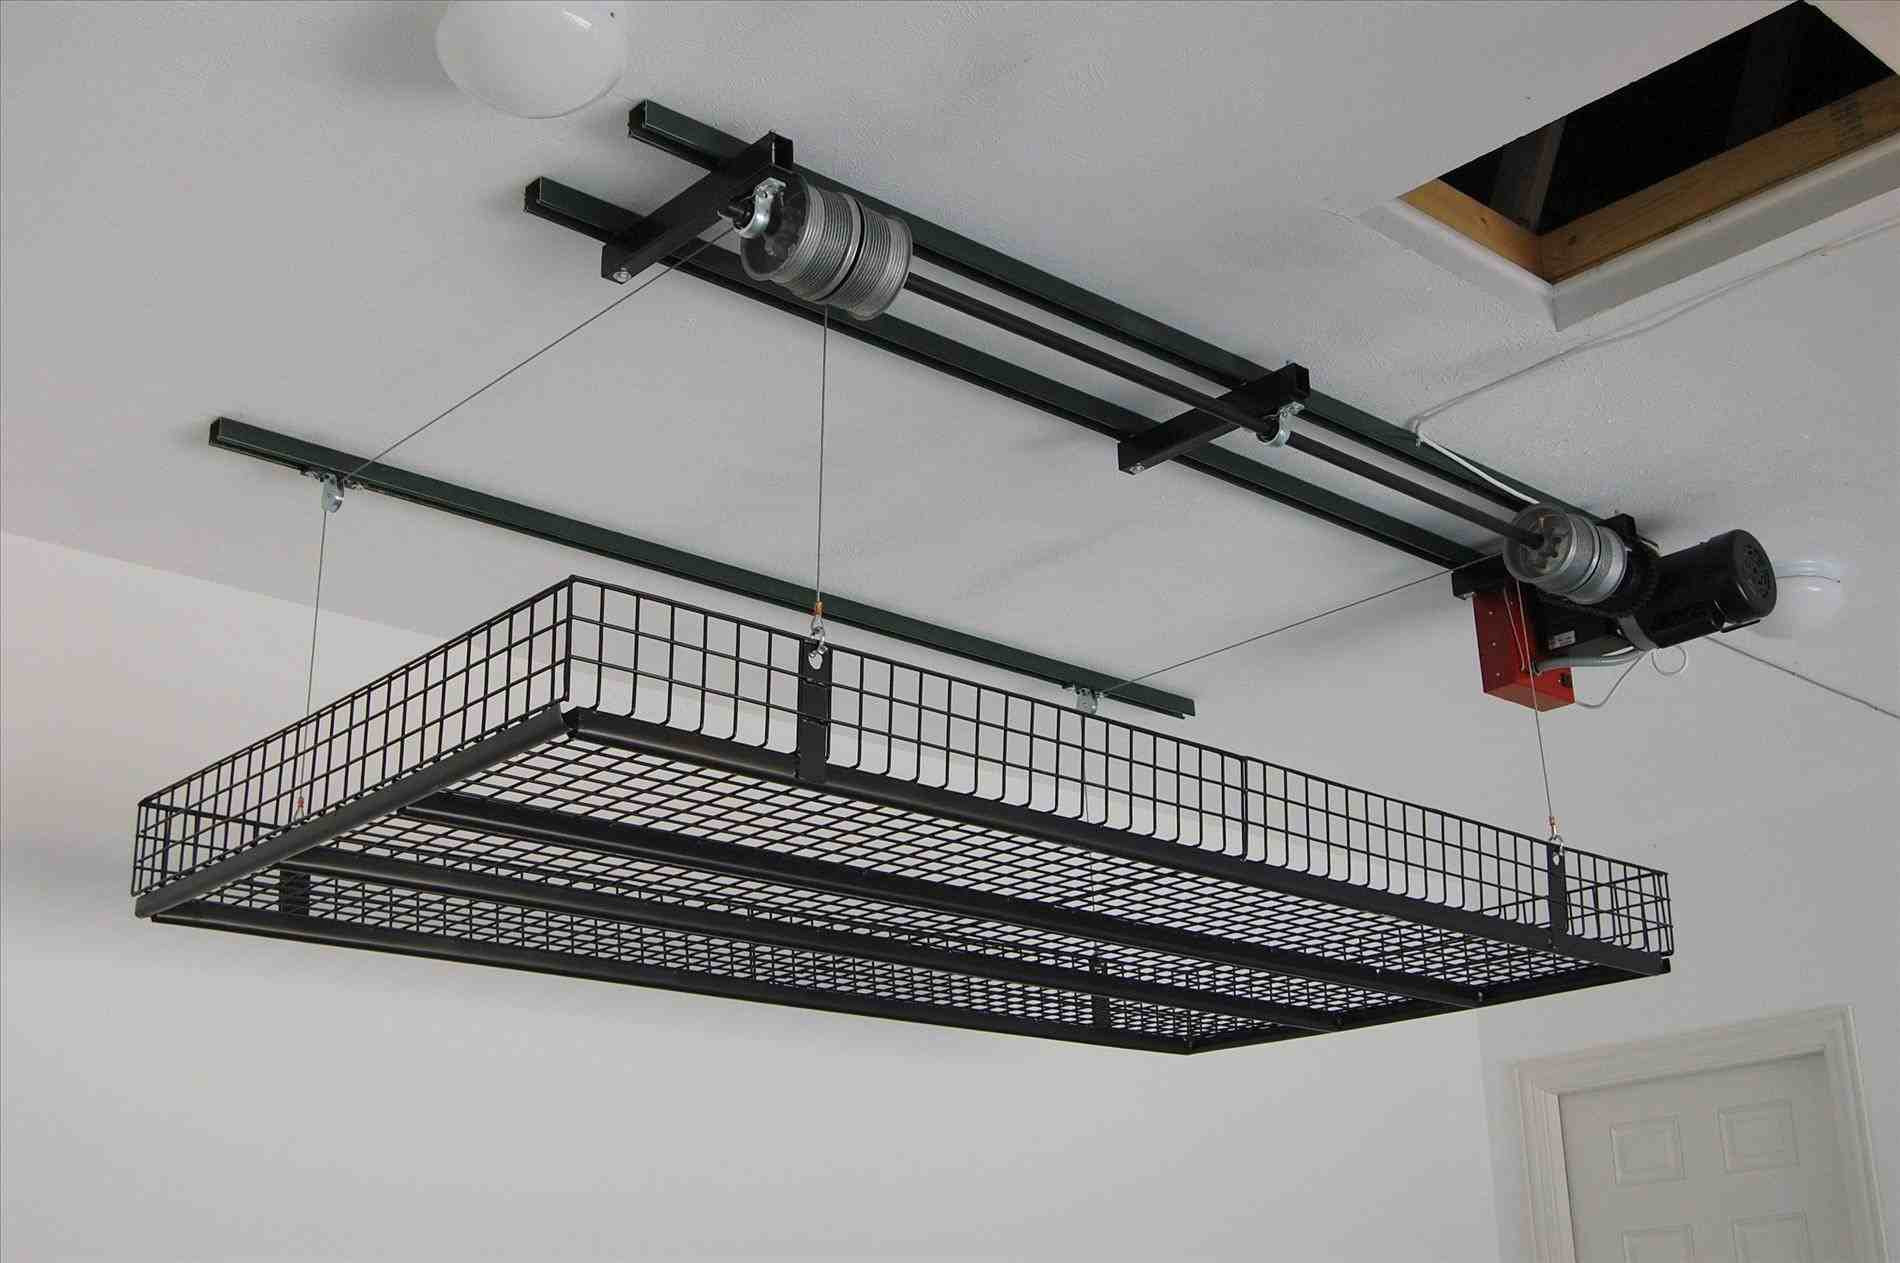 Best ideas about Garage Overhead Storage Pulley Systems
. Save or Pin Garage Overhead Storage Pulley Systems Now.